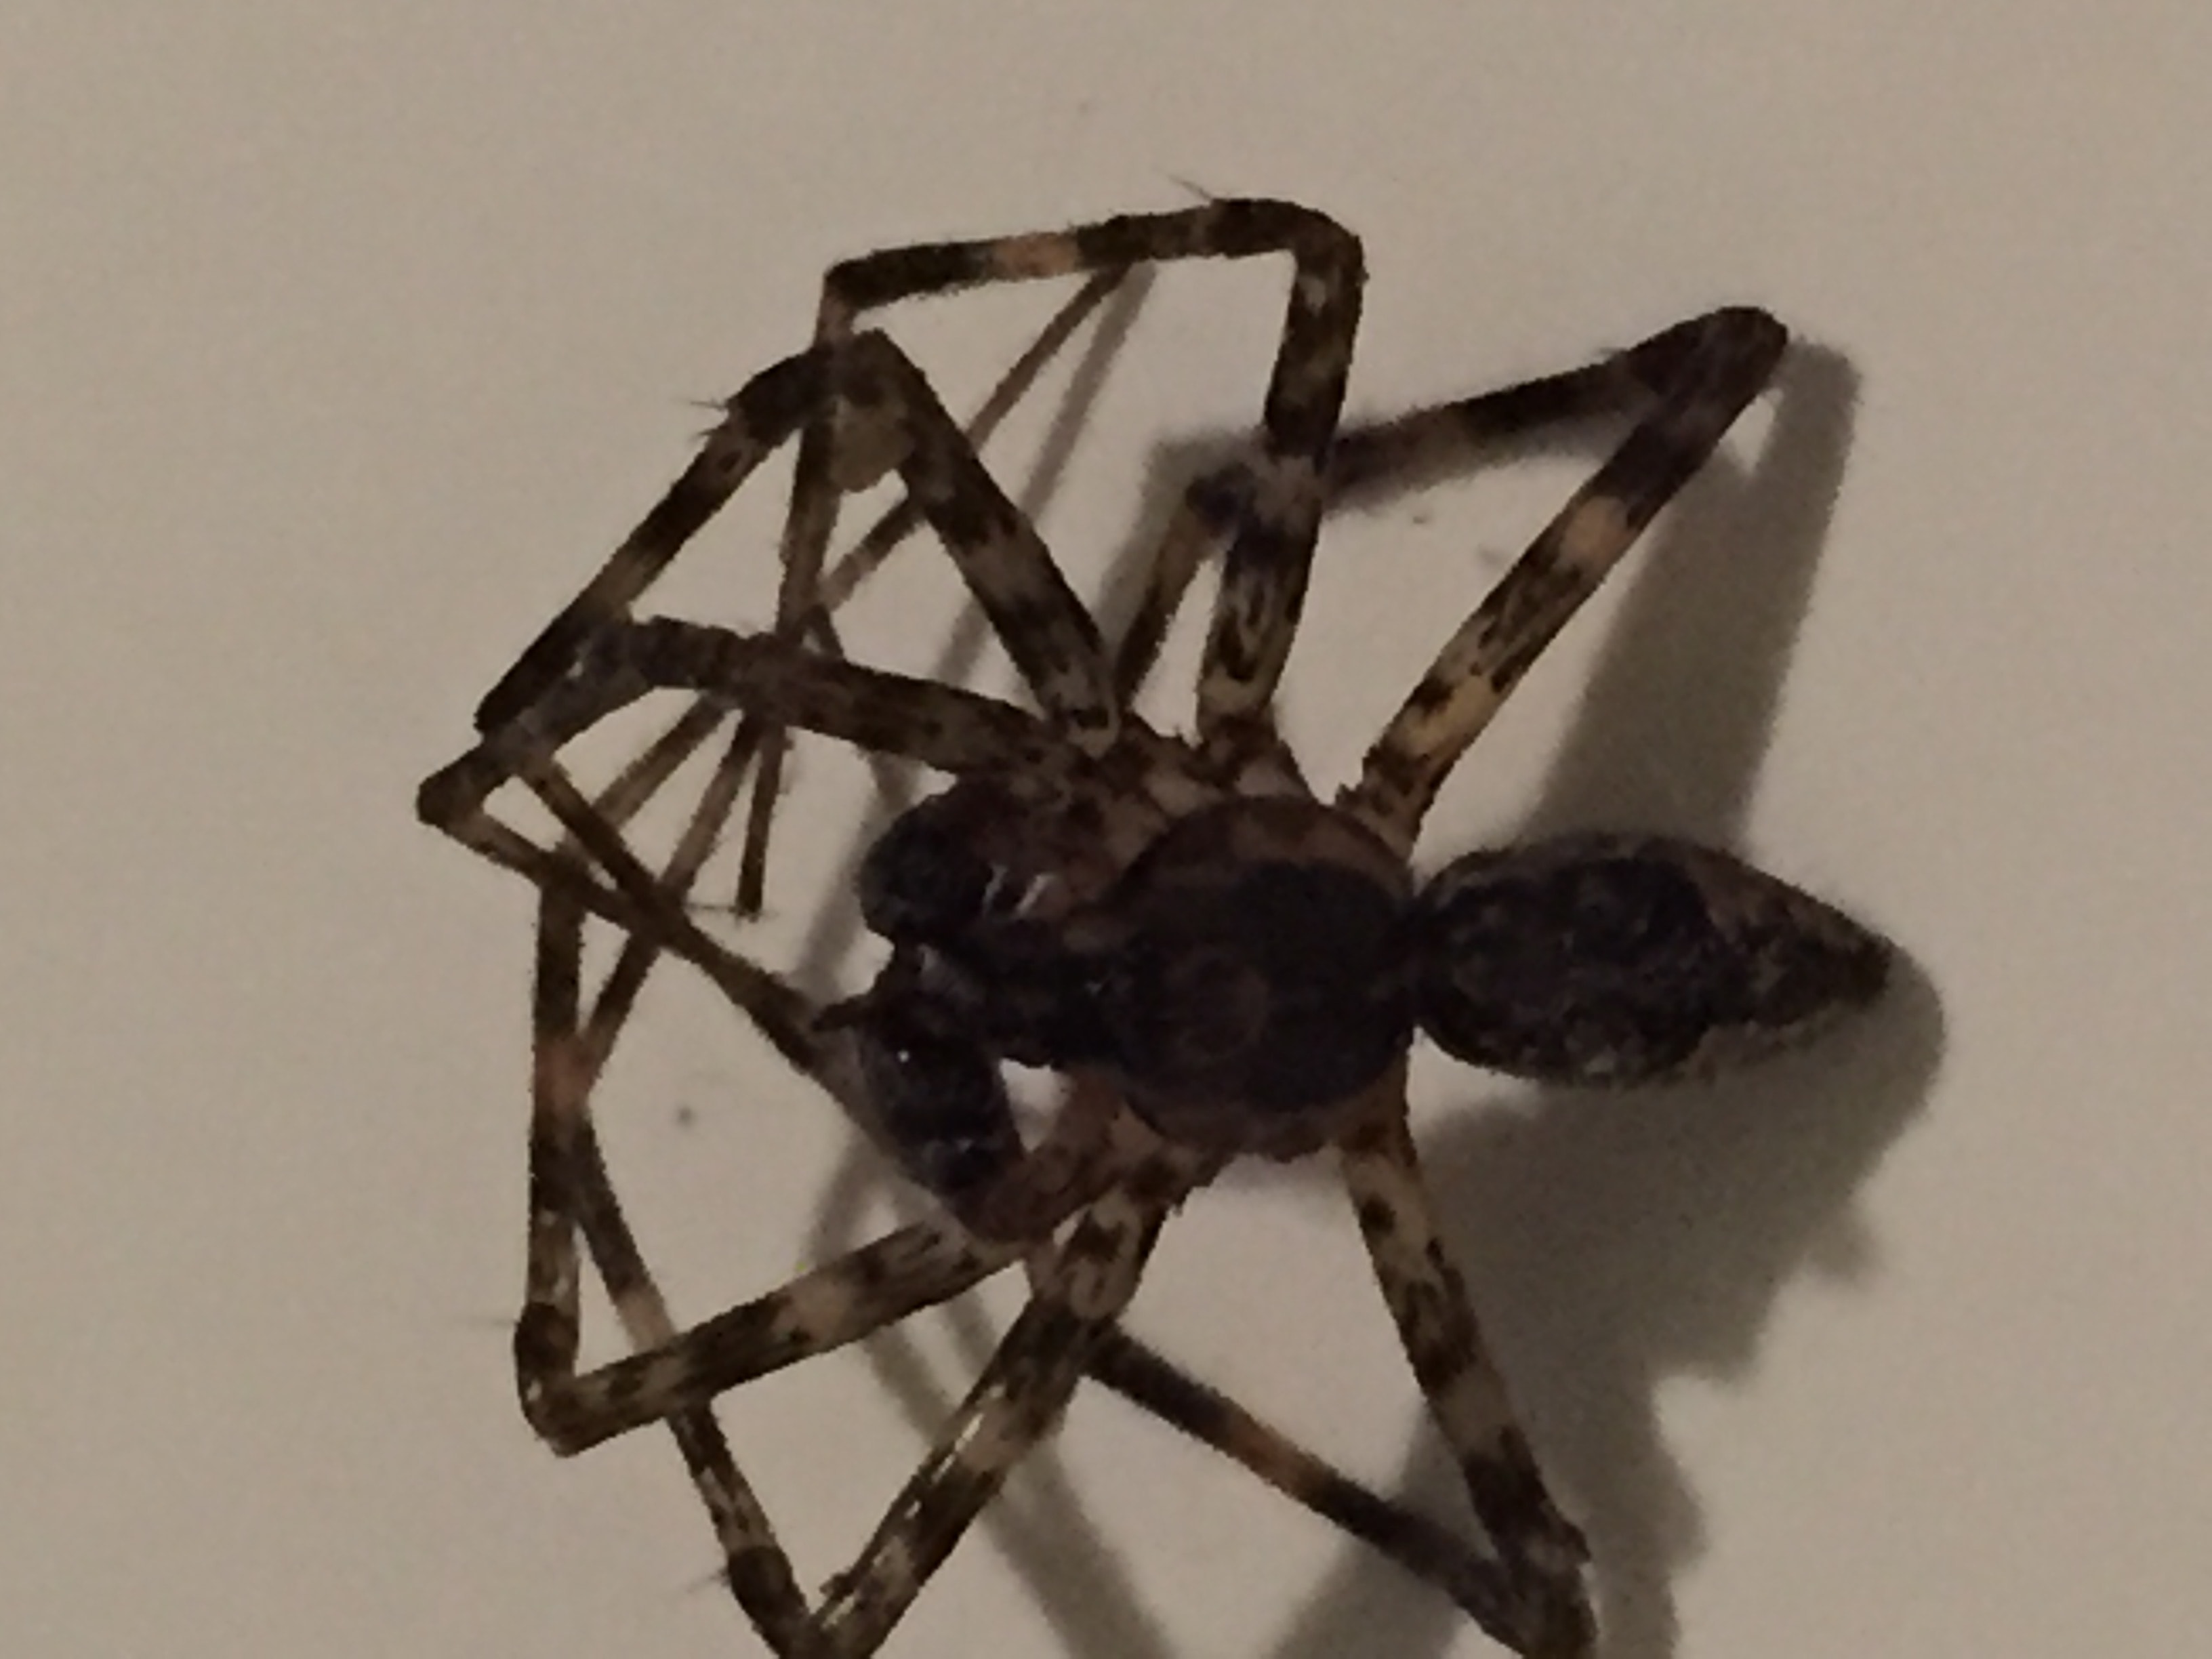 Picture of Dolomedes tenebrosus (Dark Fishing Spider) - Male - Dorsal